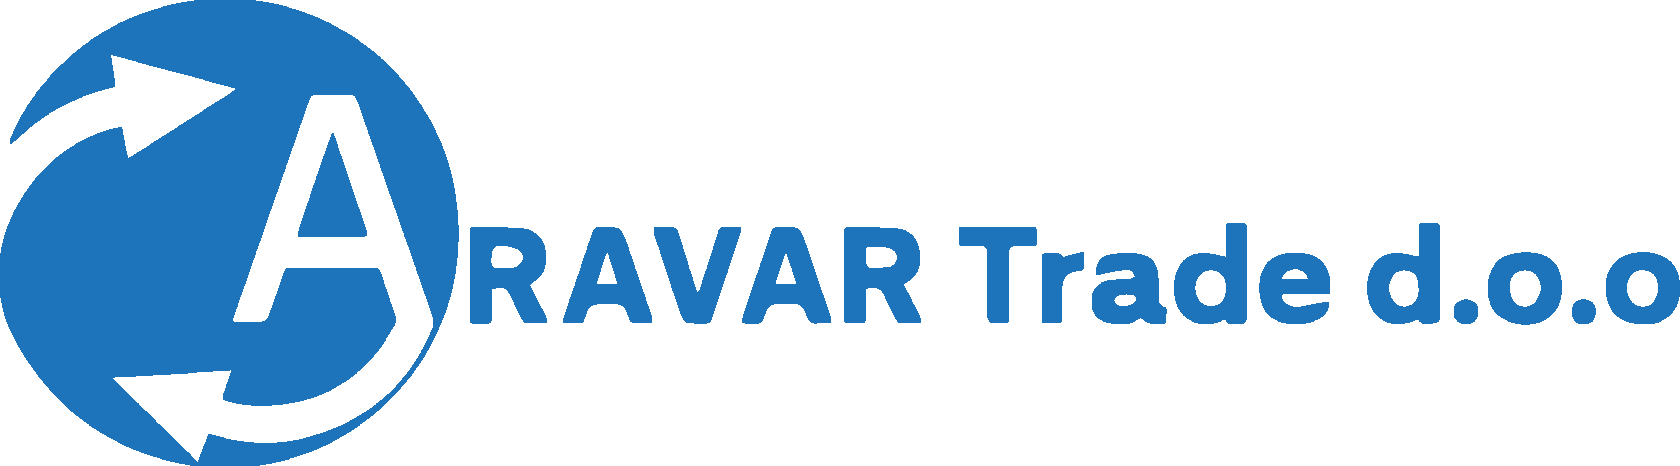 Aravar Trade